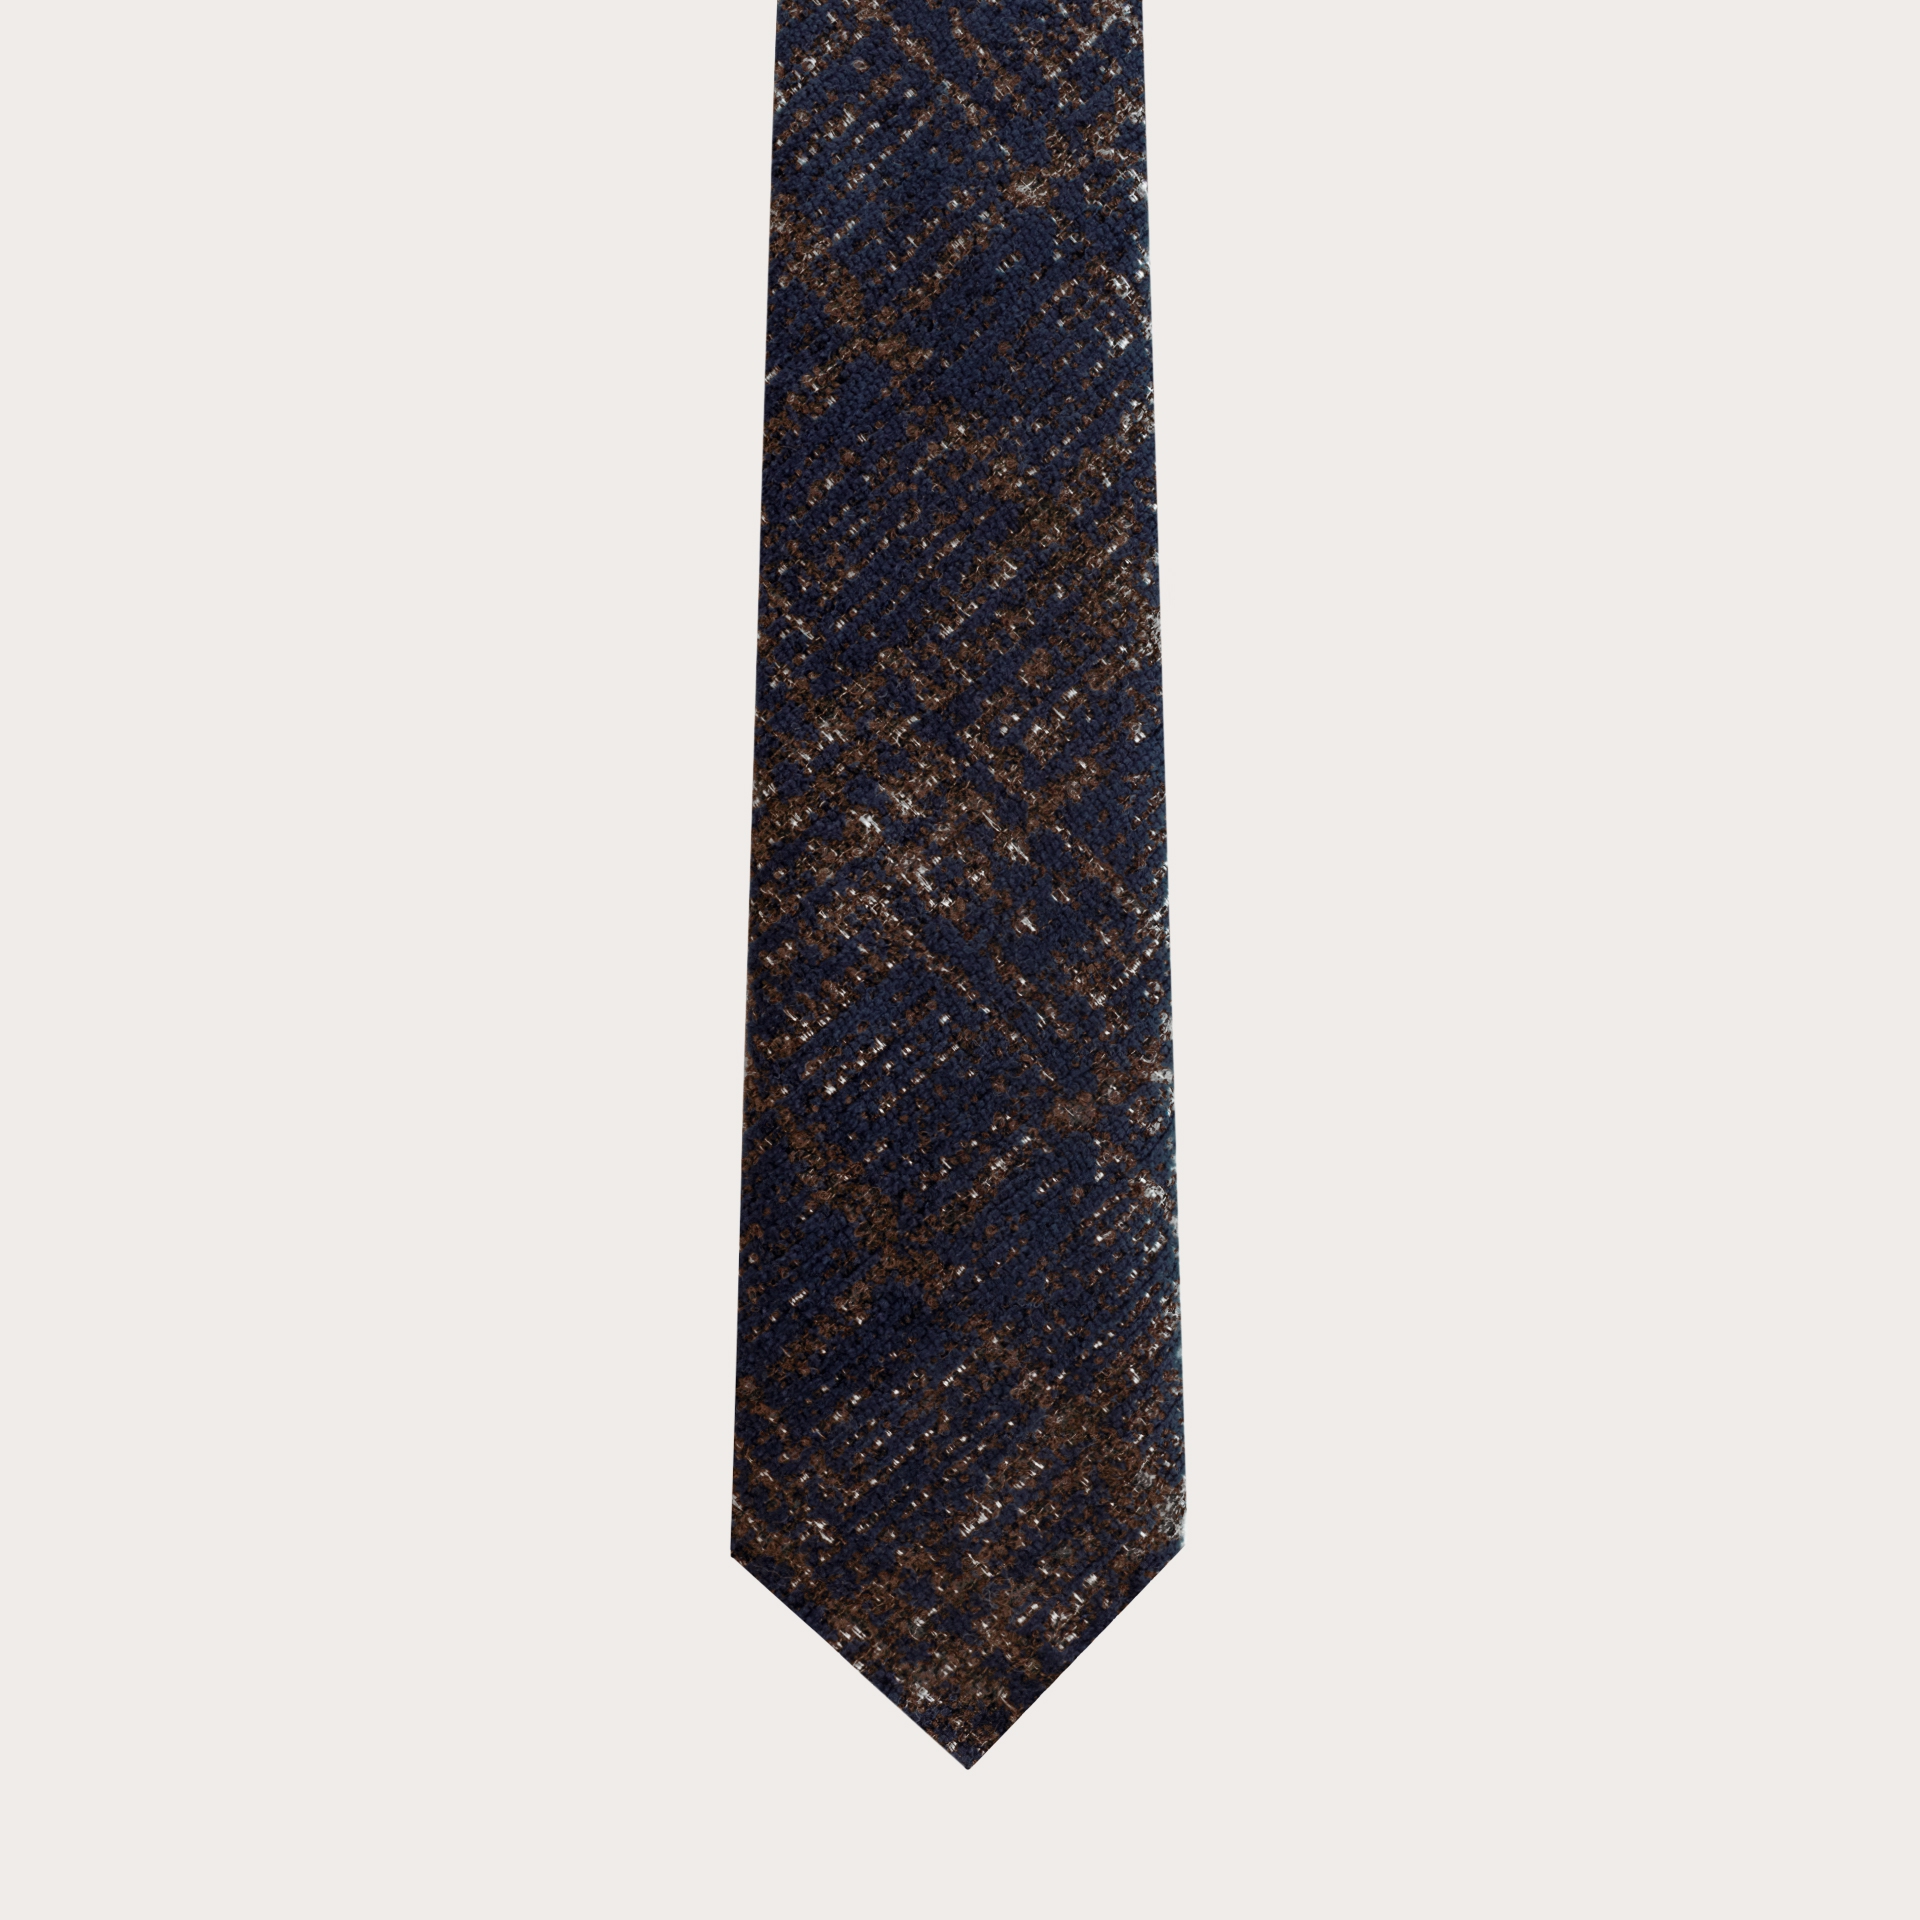 Cravatta sfoderata in lana e seta, tartan blu e marrone